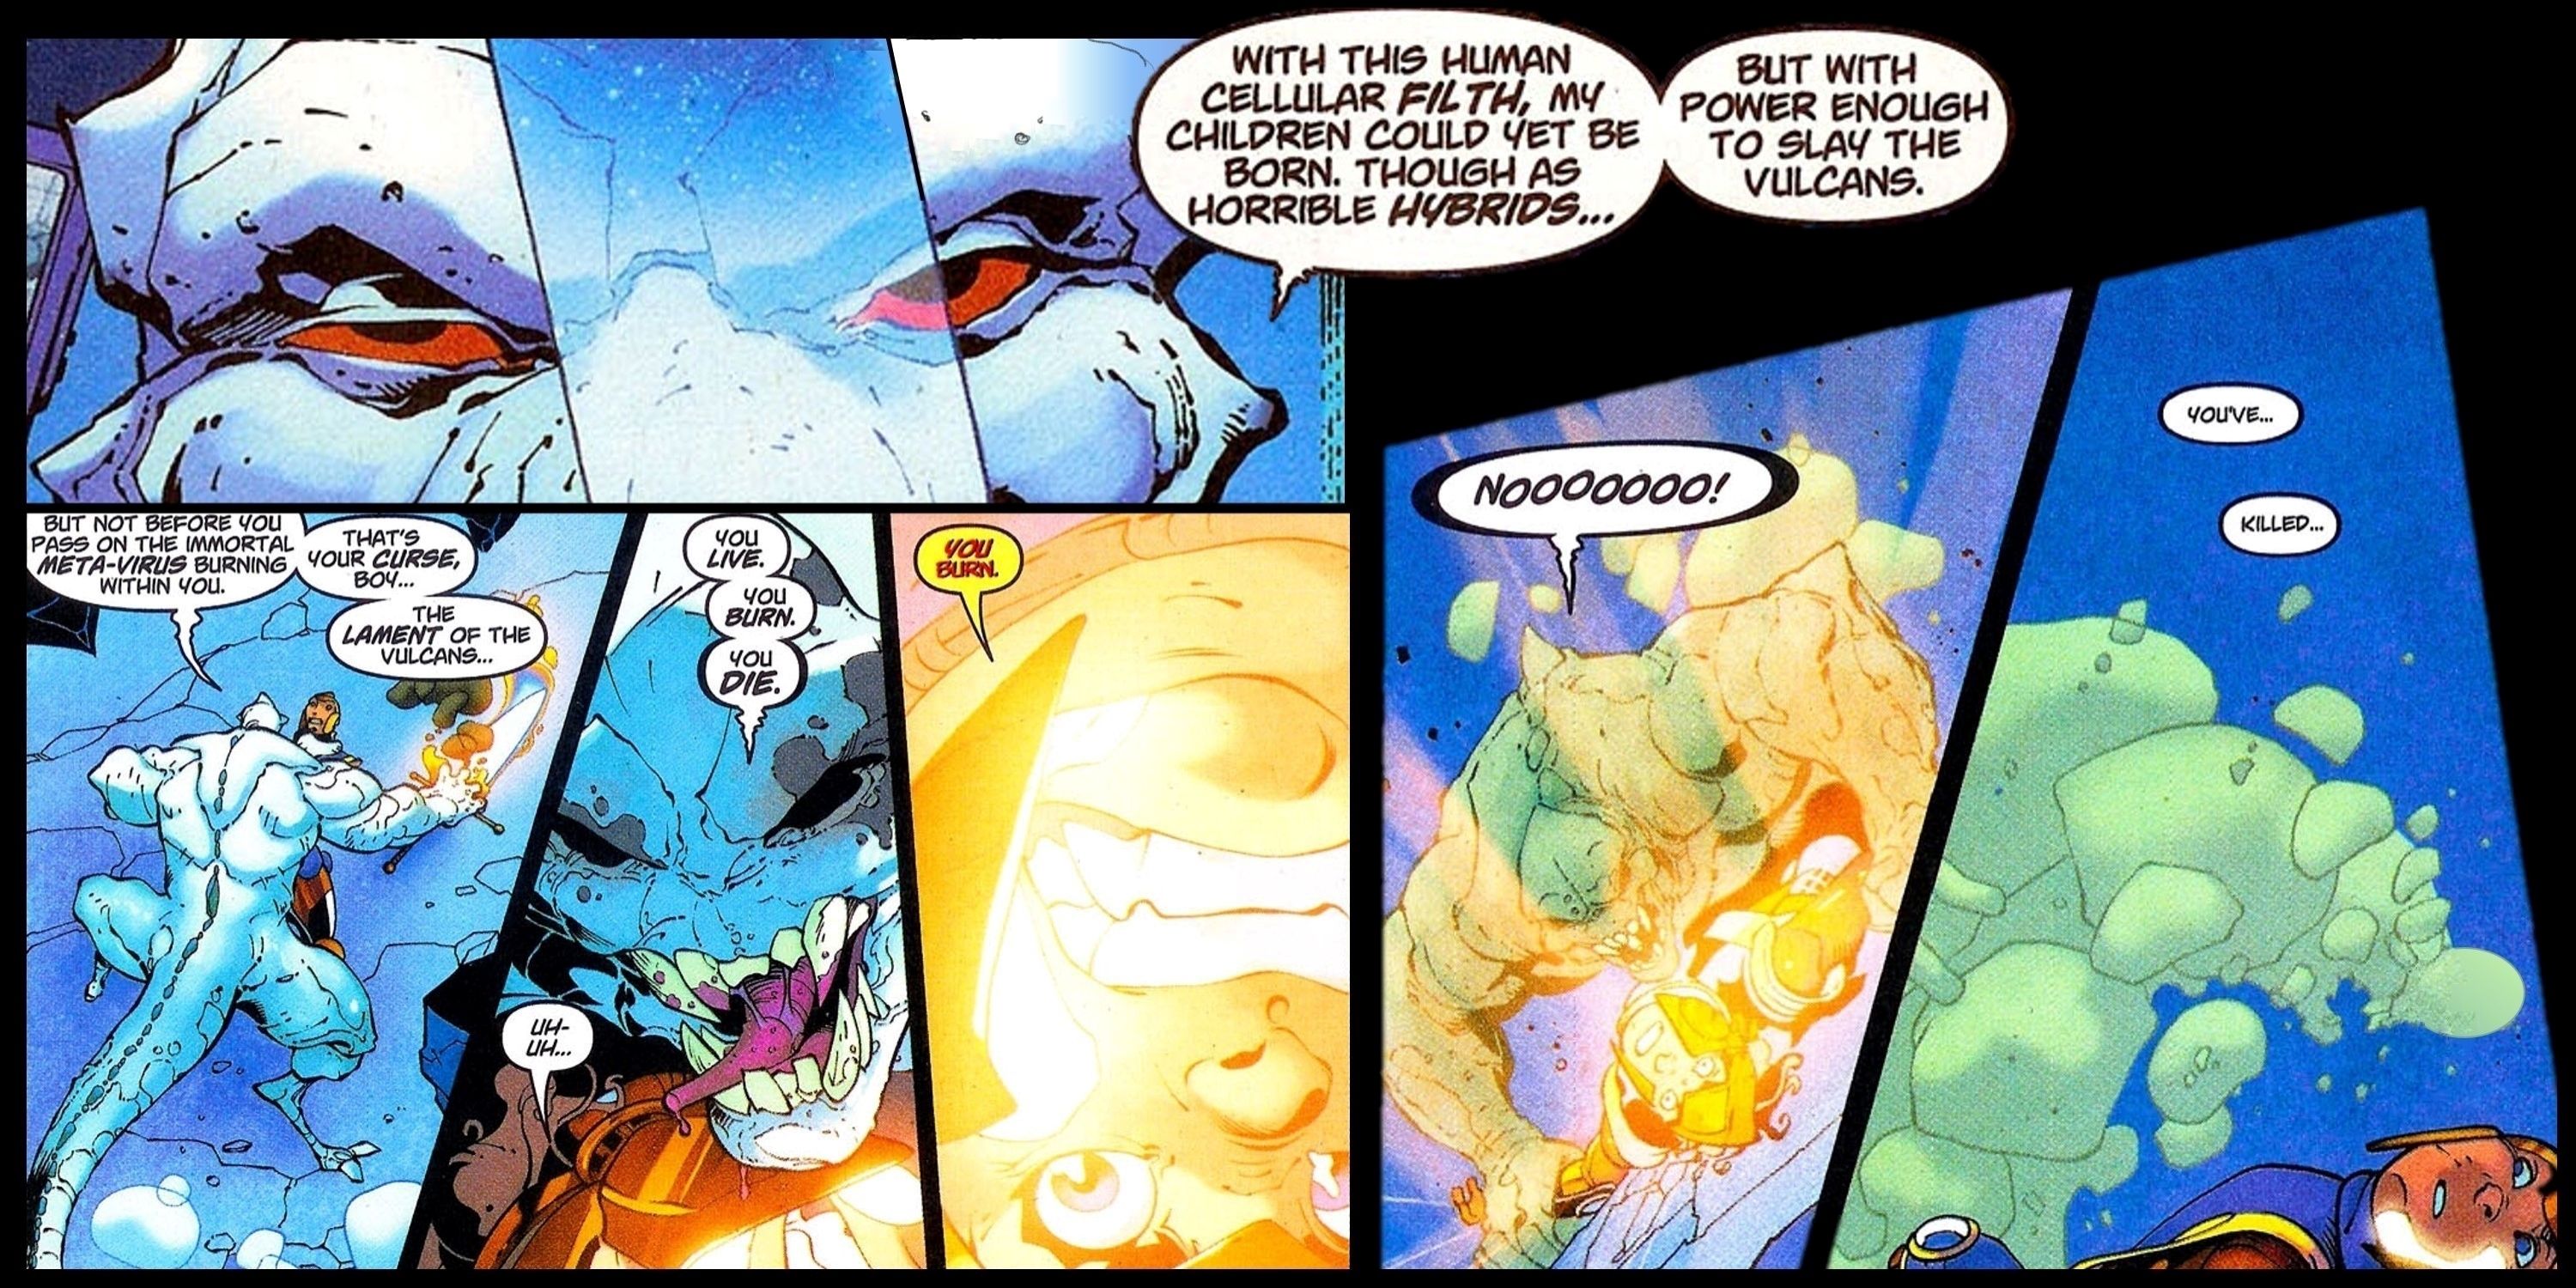 The Vulcan Mikey Devante defeats the White Martian A'monn A'mokk with his metagen in DC Comics